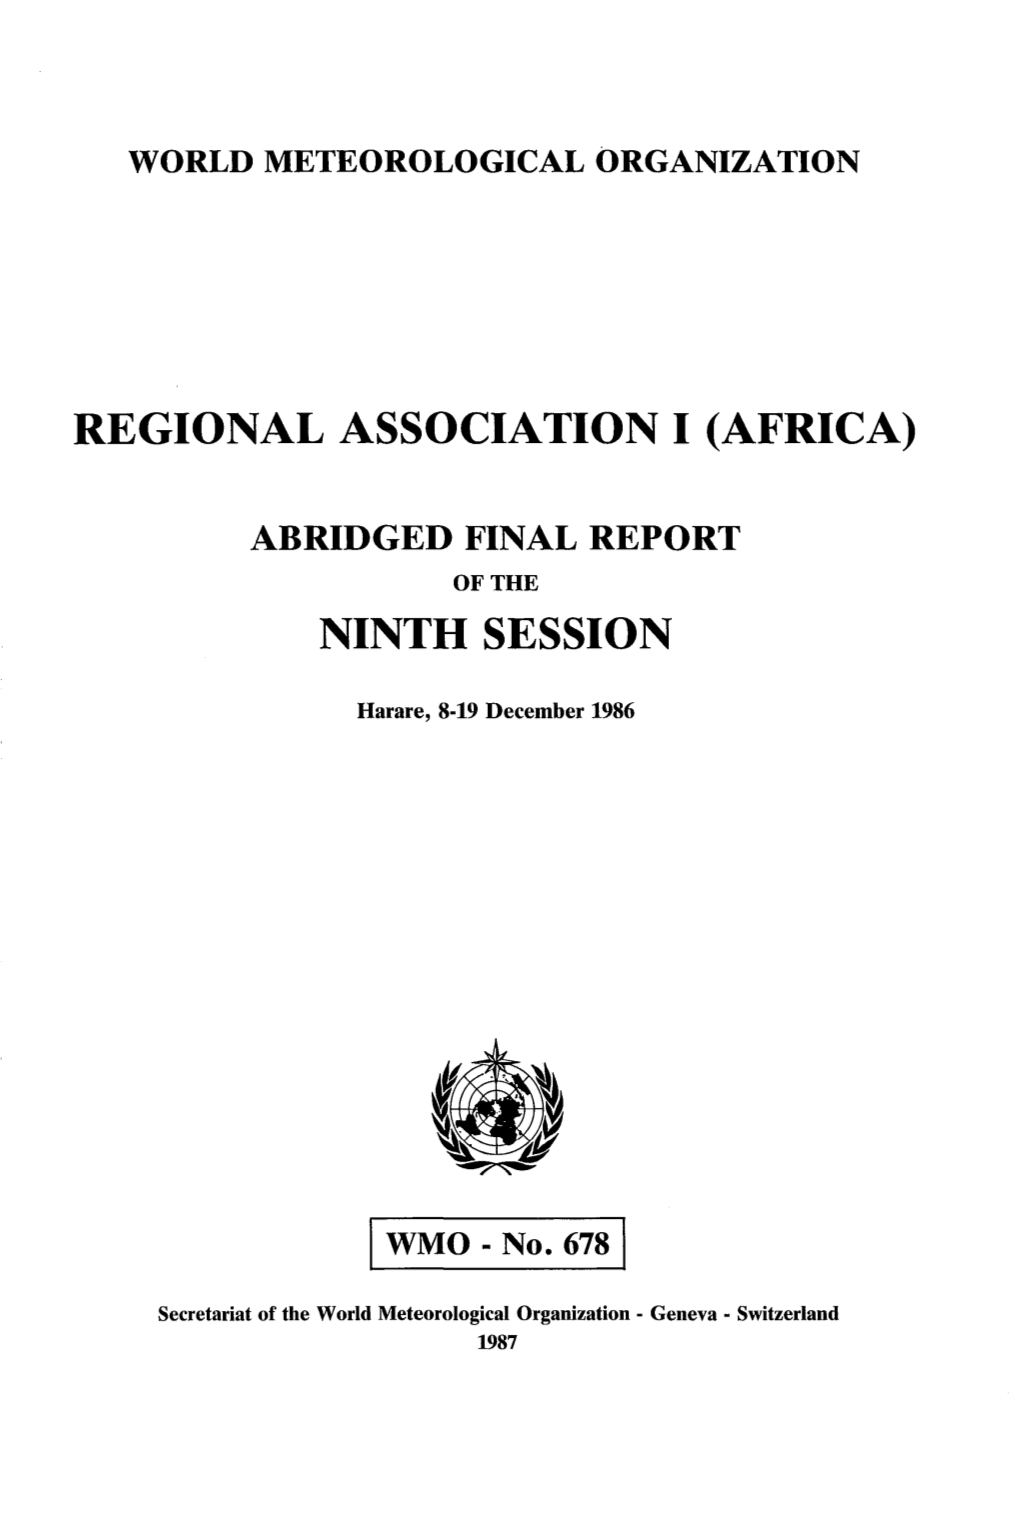 Regional Association I (Africa) Ninth Session